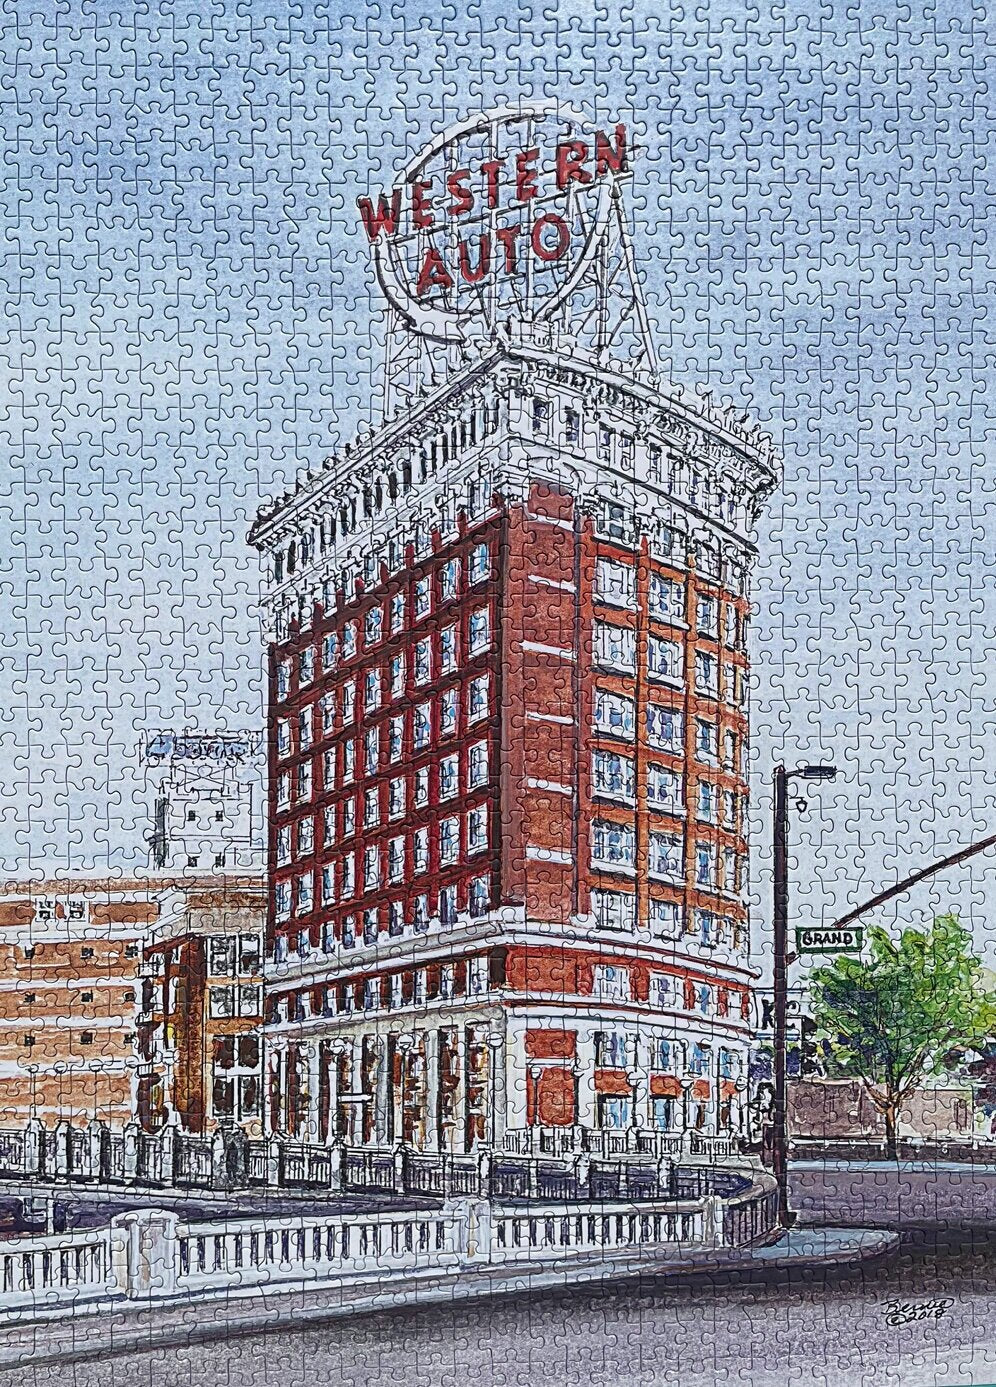 Western Auto Puzzle by Bernadette Lee